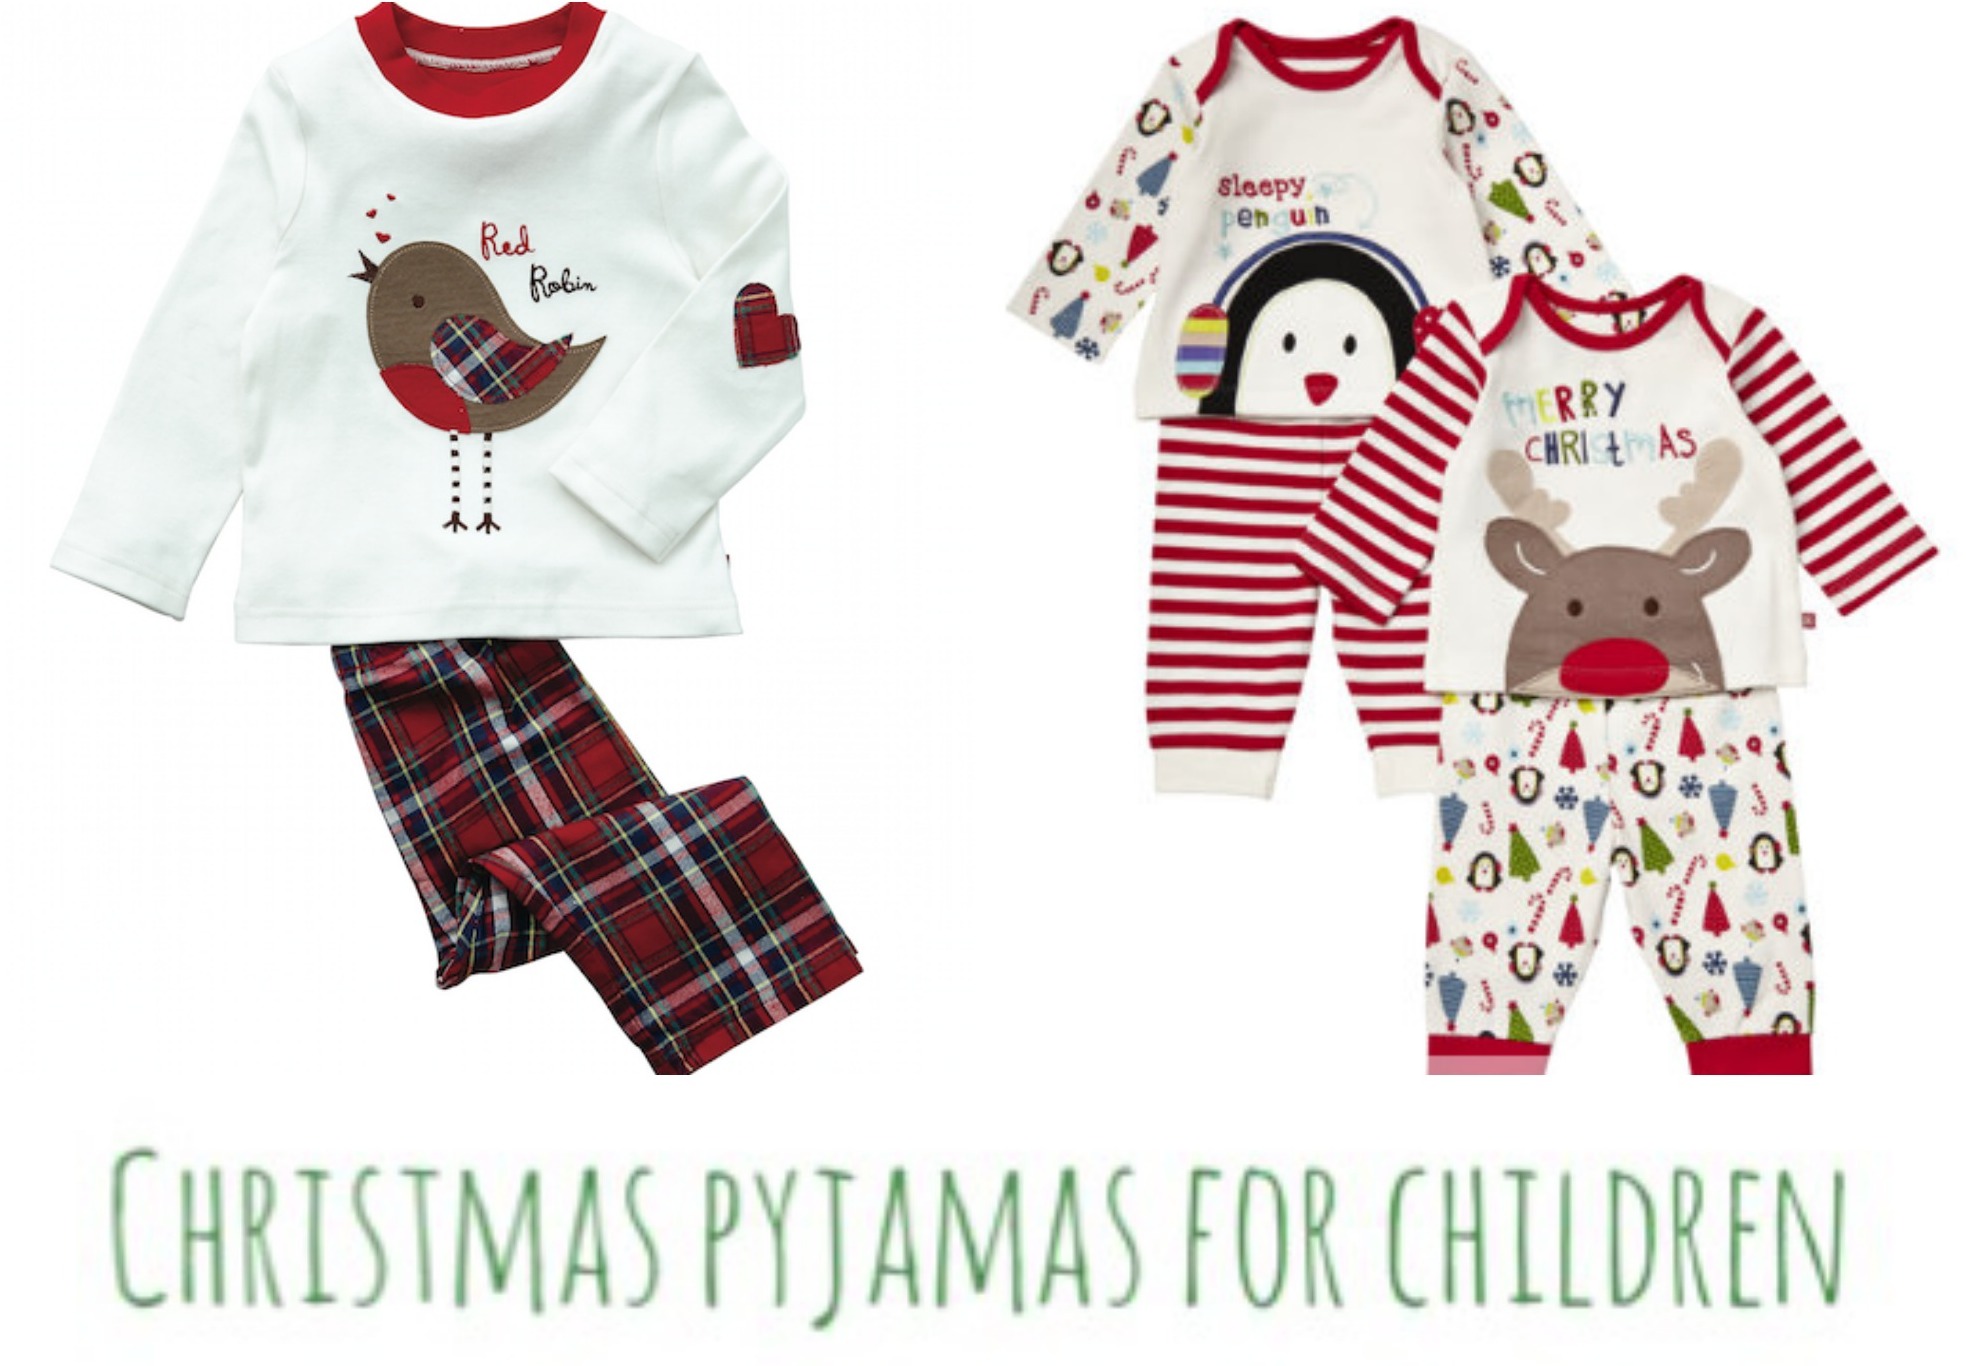 Christmas pyjamas for children | A Baby on Board blog